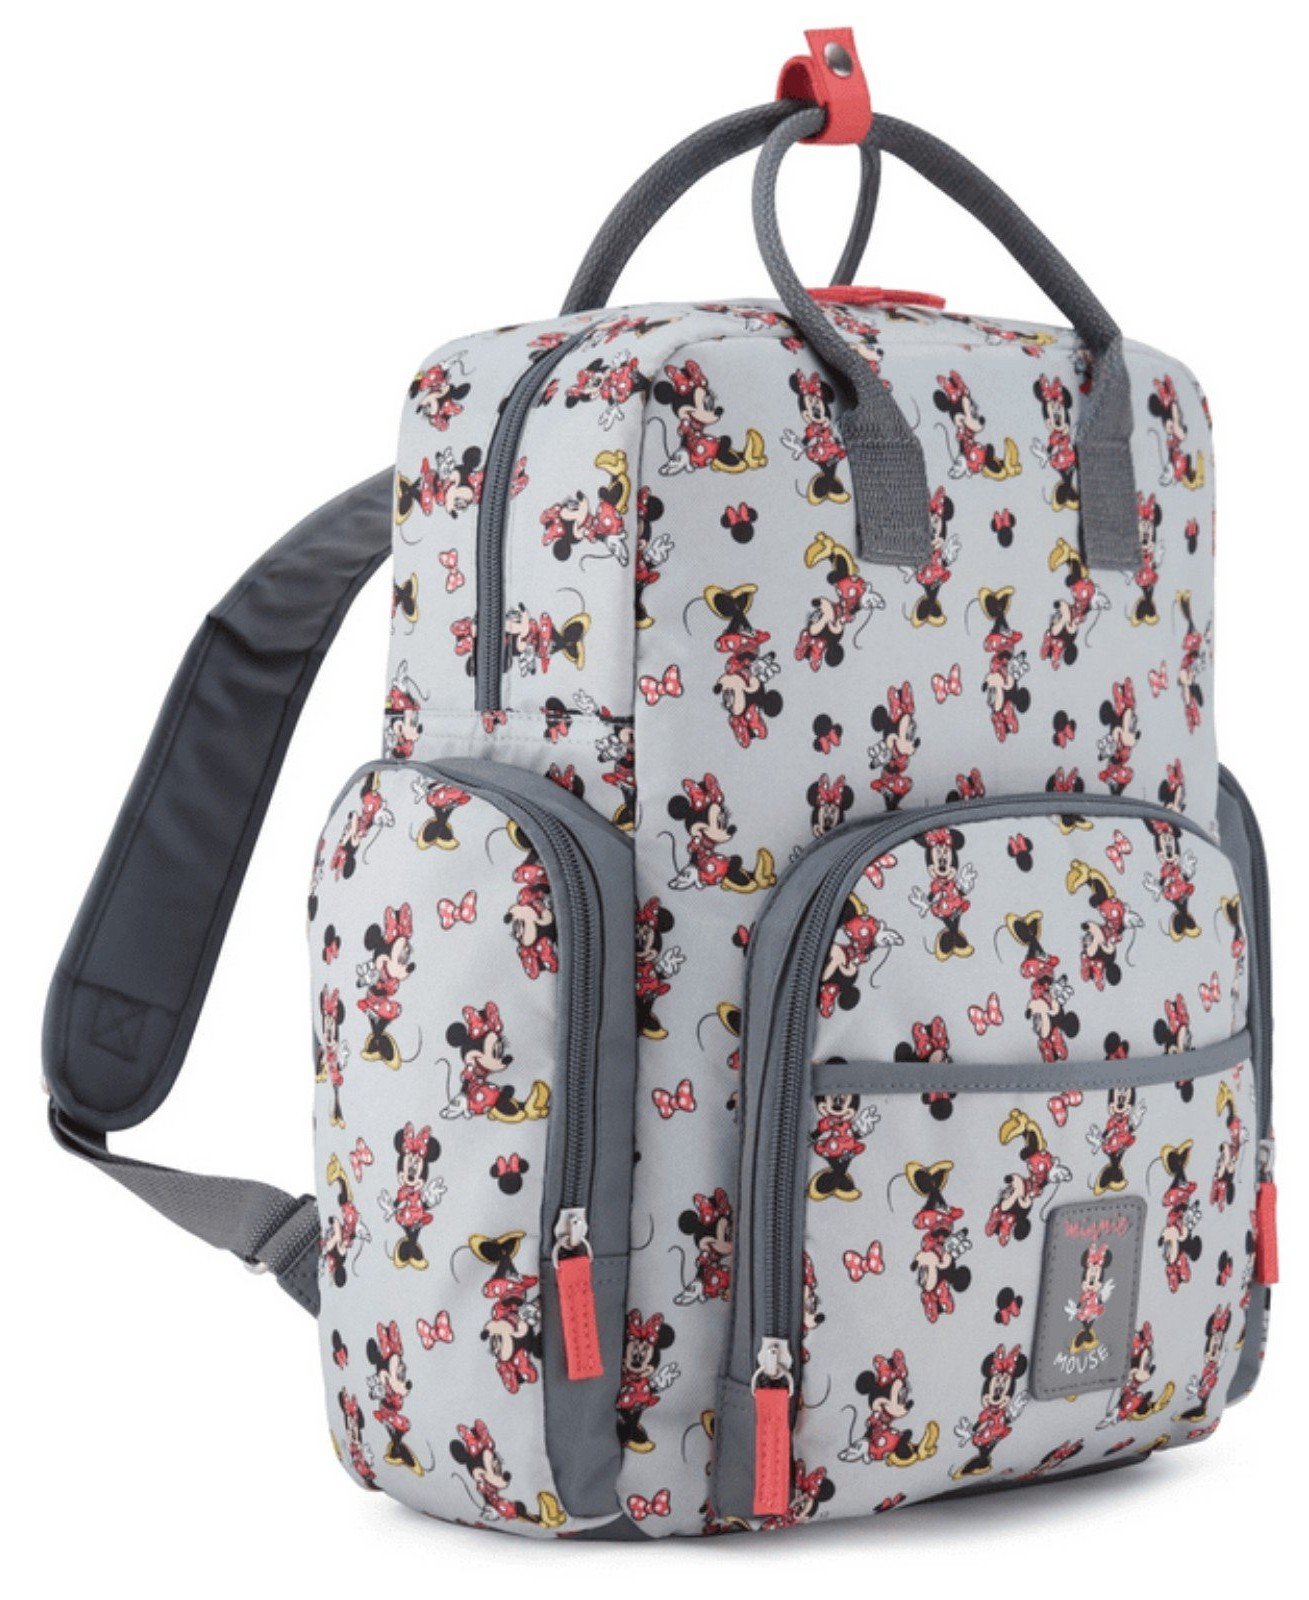 Disney Minnie Mouse Diaper Bag Tote Bag Large Very Spacious Great Quality 15 Inc IledXoa3n